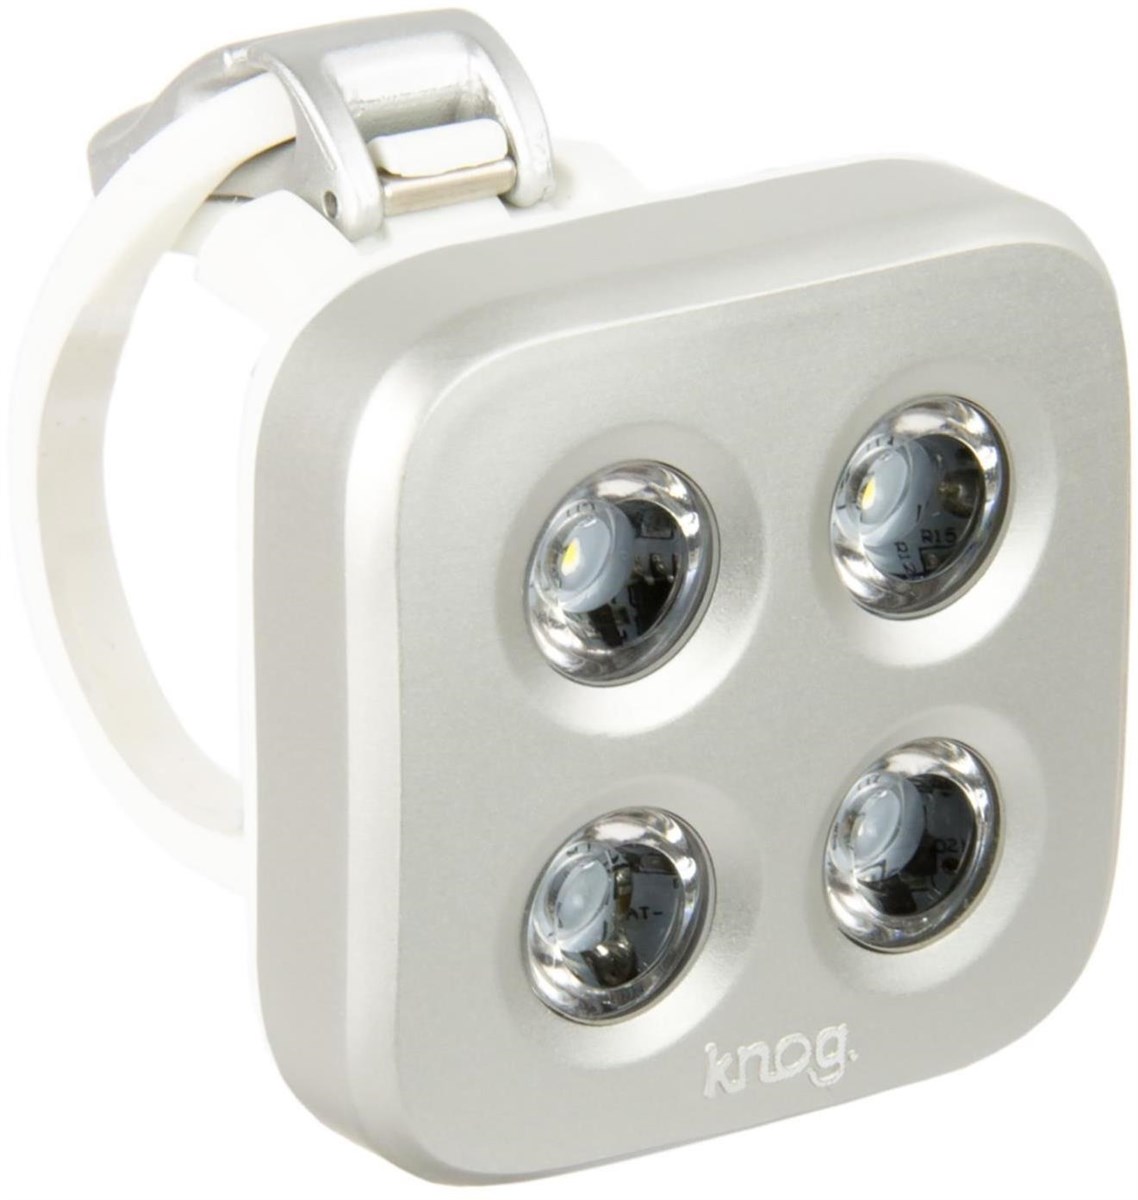 Knog Blinder Mob The Face USB Rechargeable Front Light